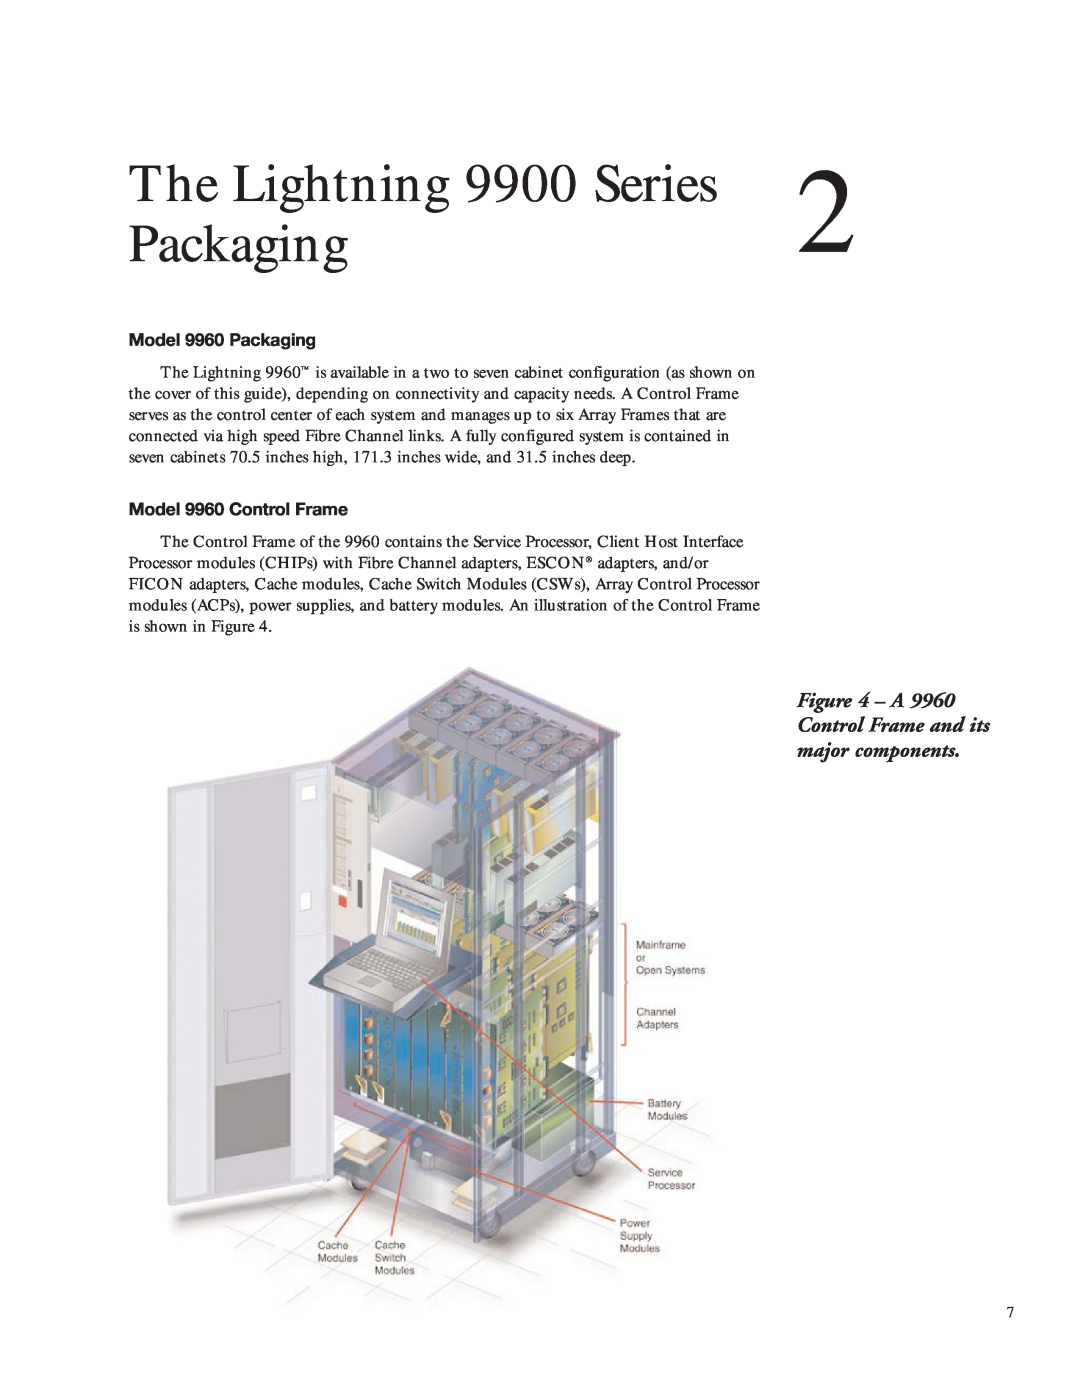 Hitachi manual The Lightning 9900 Series, Model 9960 Packaging, Model 9960 Control Frame 